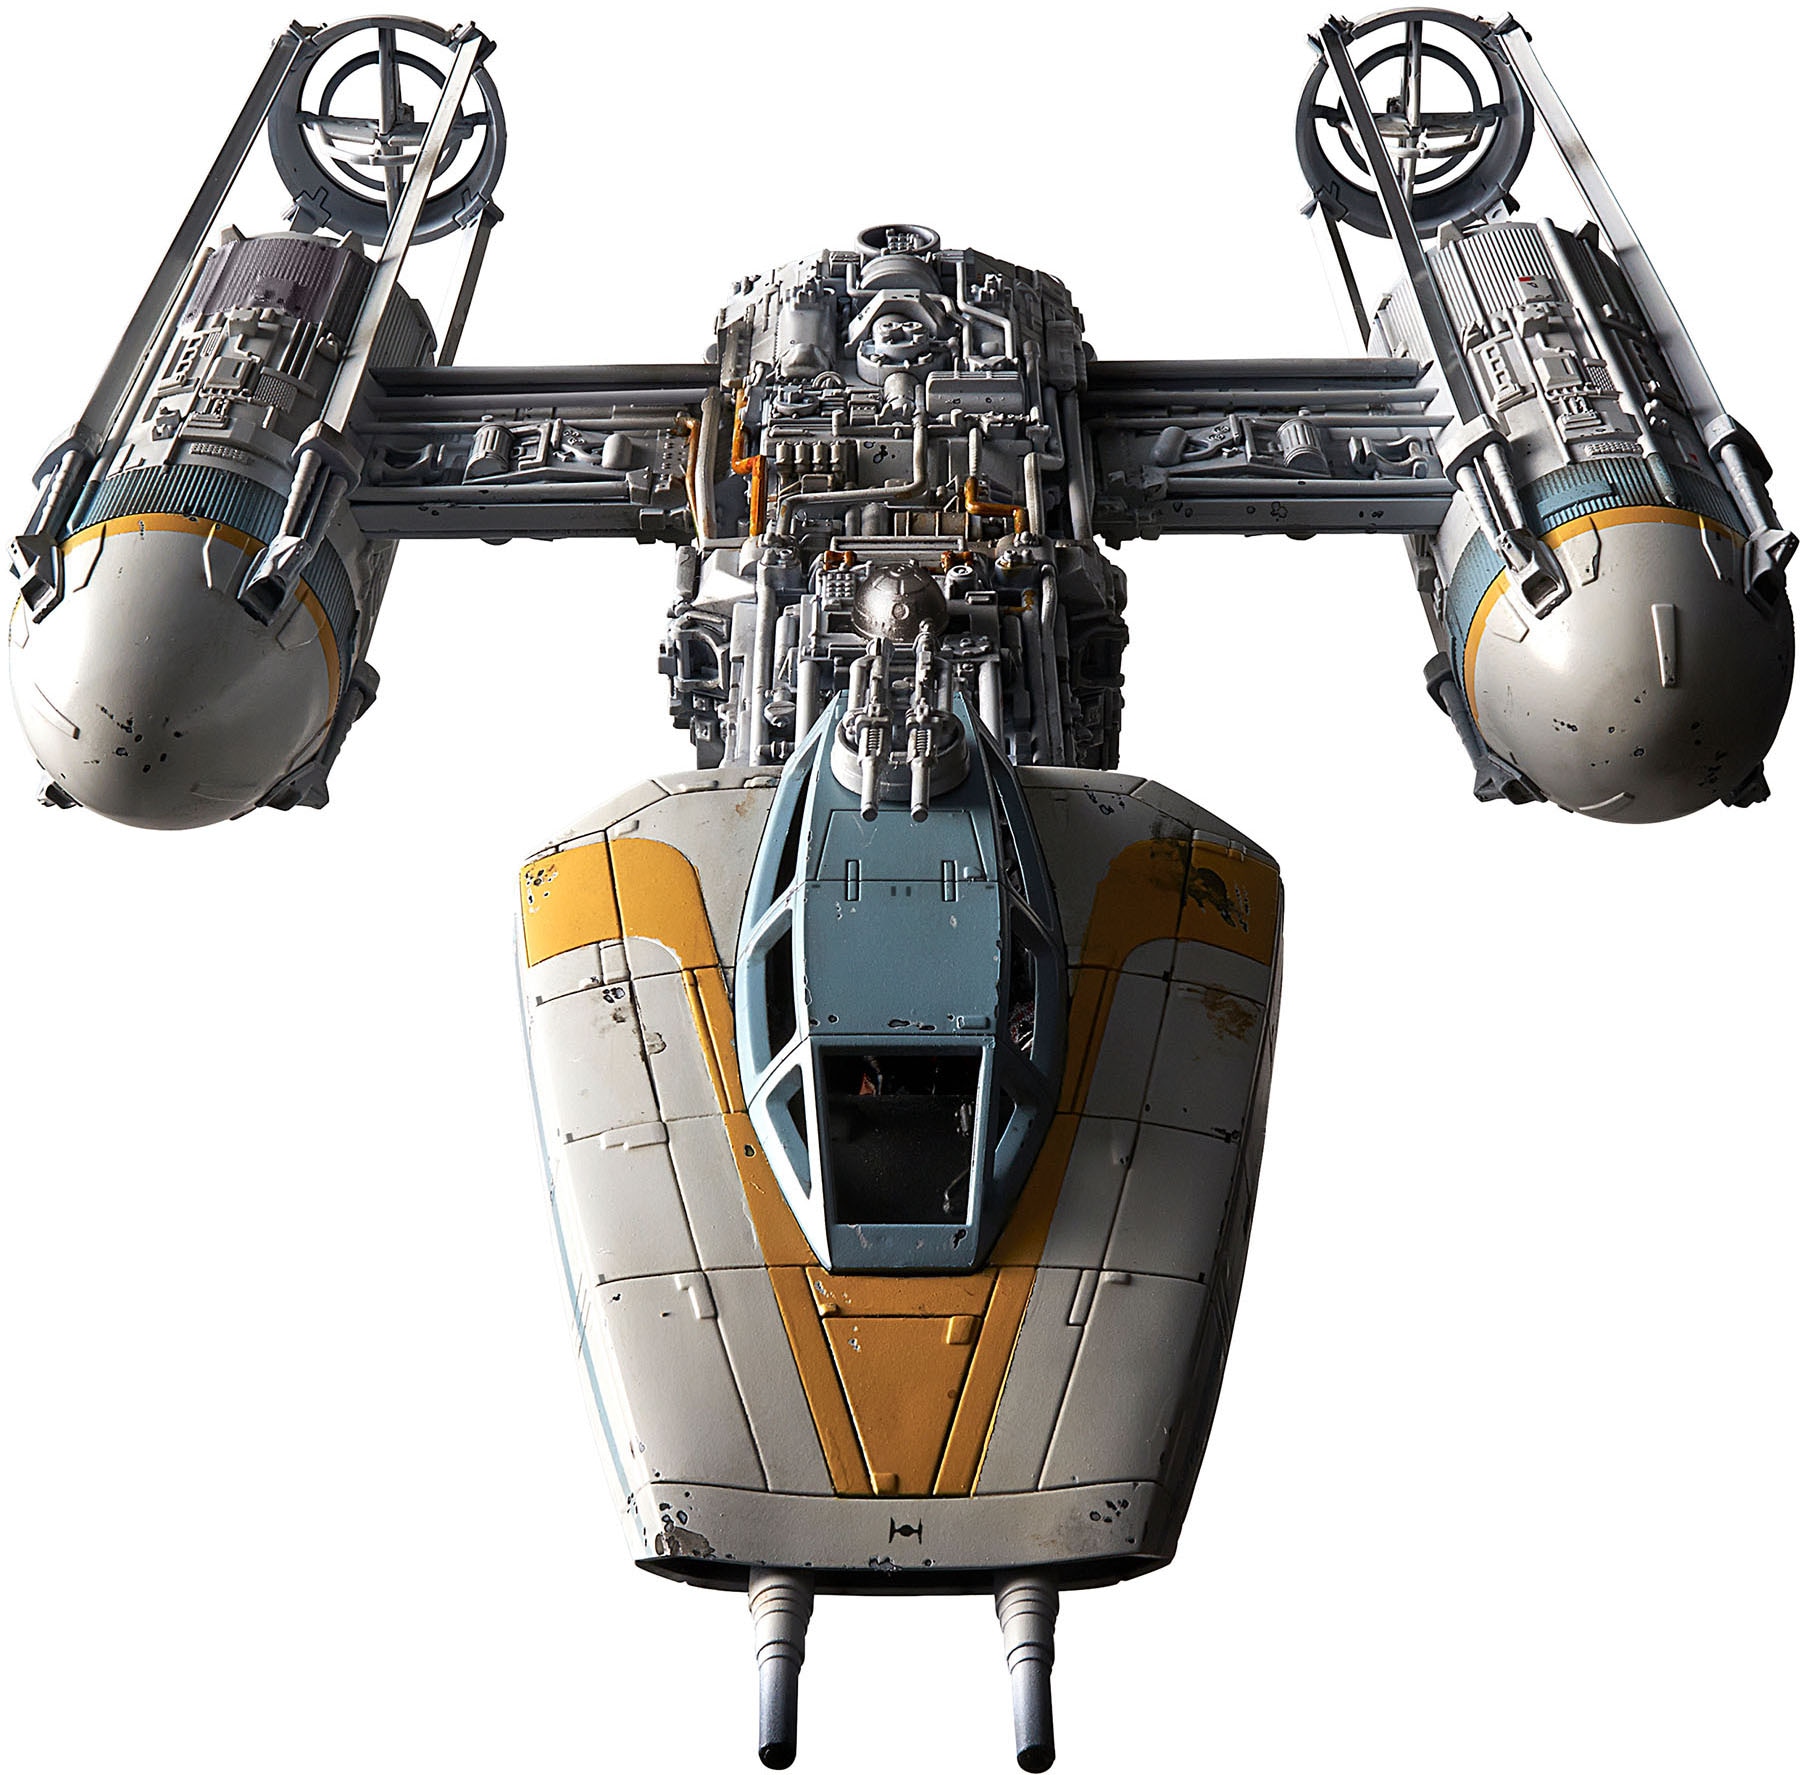 Bandai Modellbausatz »Star Wars - Y-Wing Starfighter«, 1:72